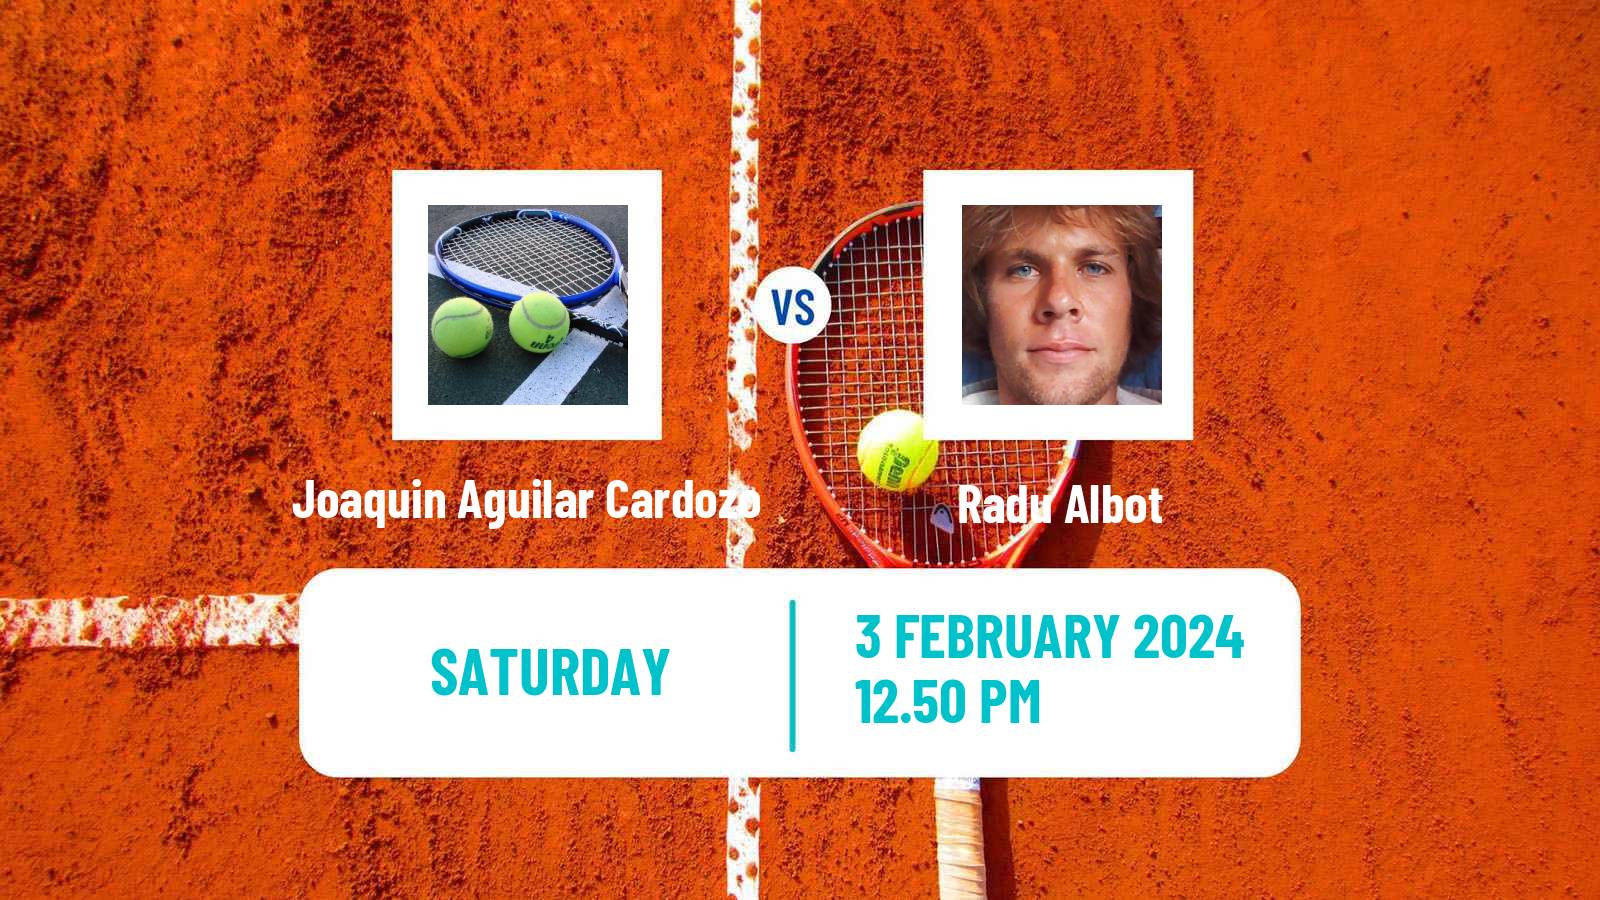 Tennis Davis Cup World Group II Joaquin Aguilar Cardozo - Radu Albot